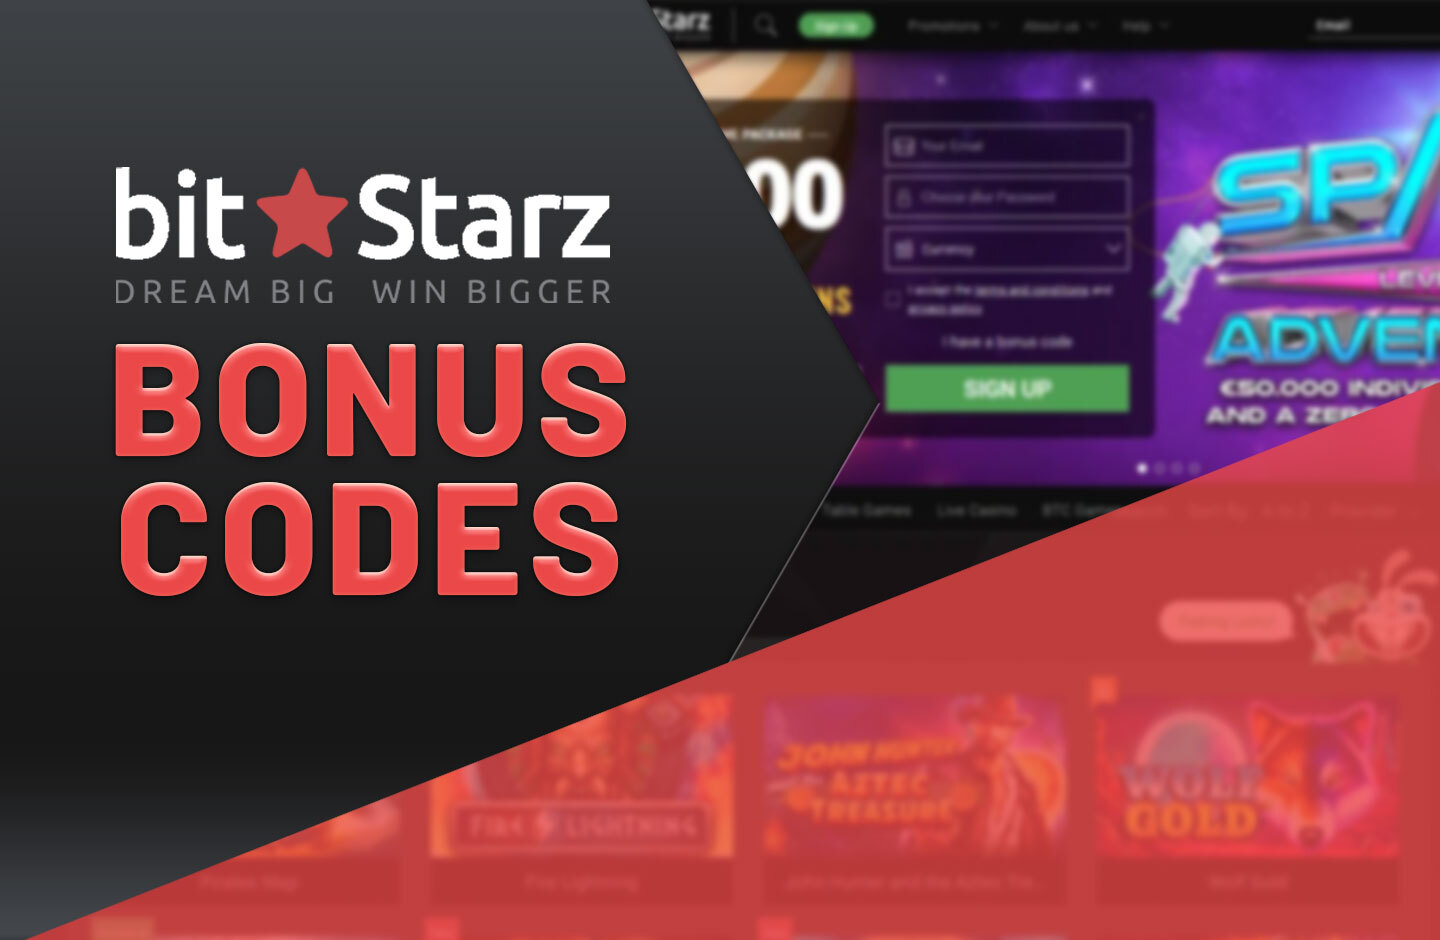 bitstarz no deposit bonus for existing players